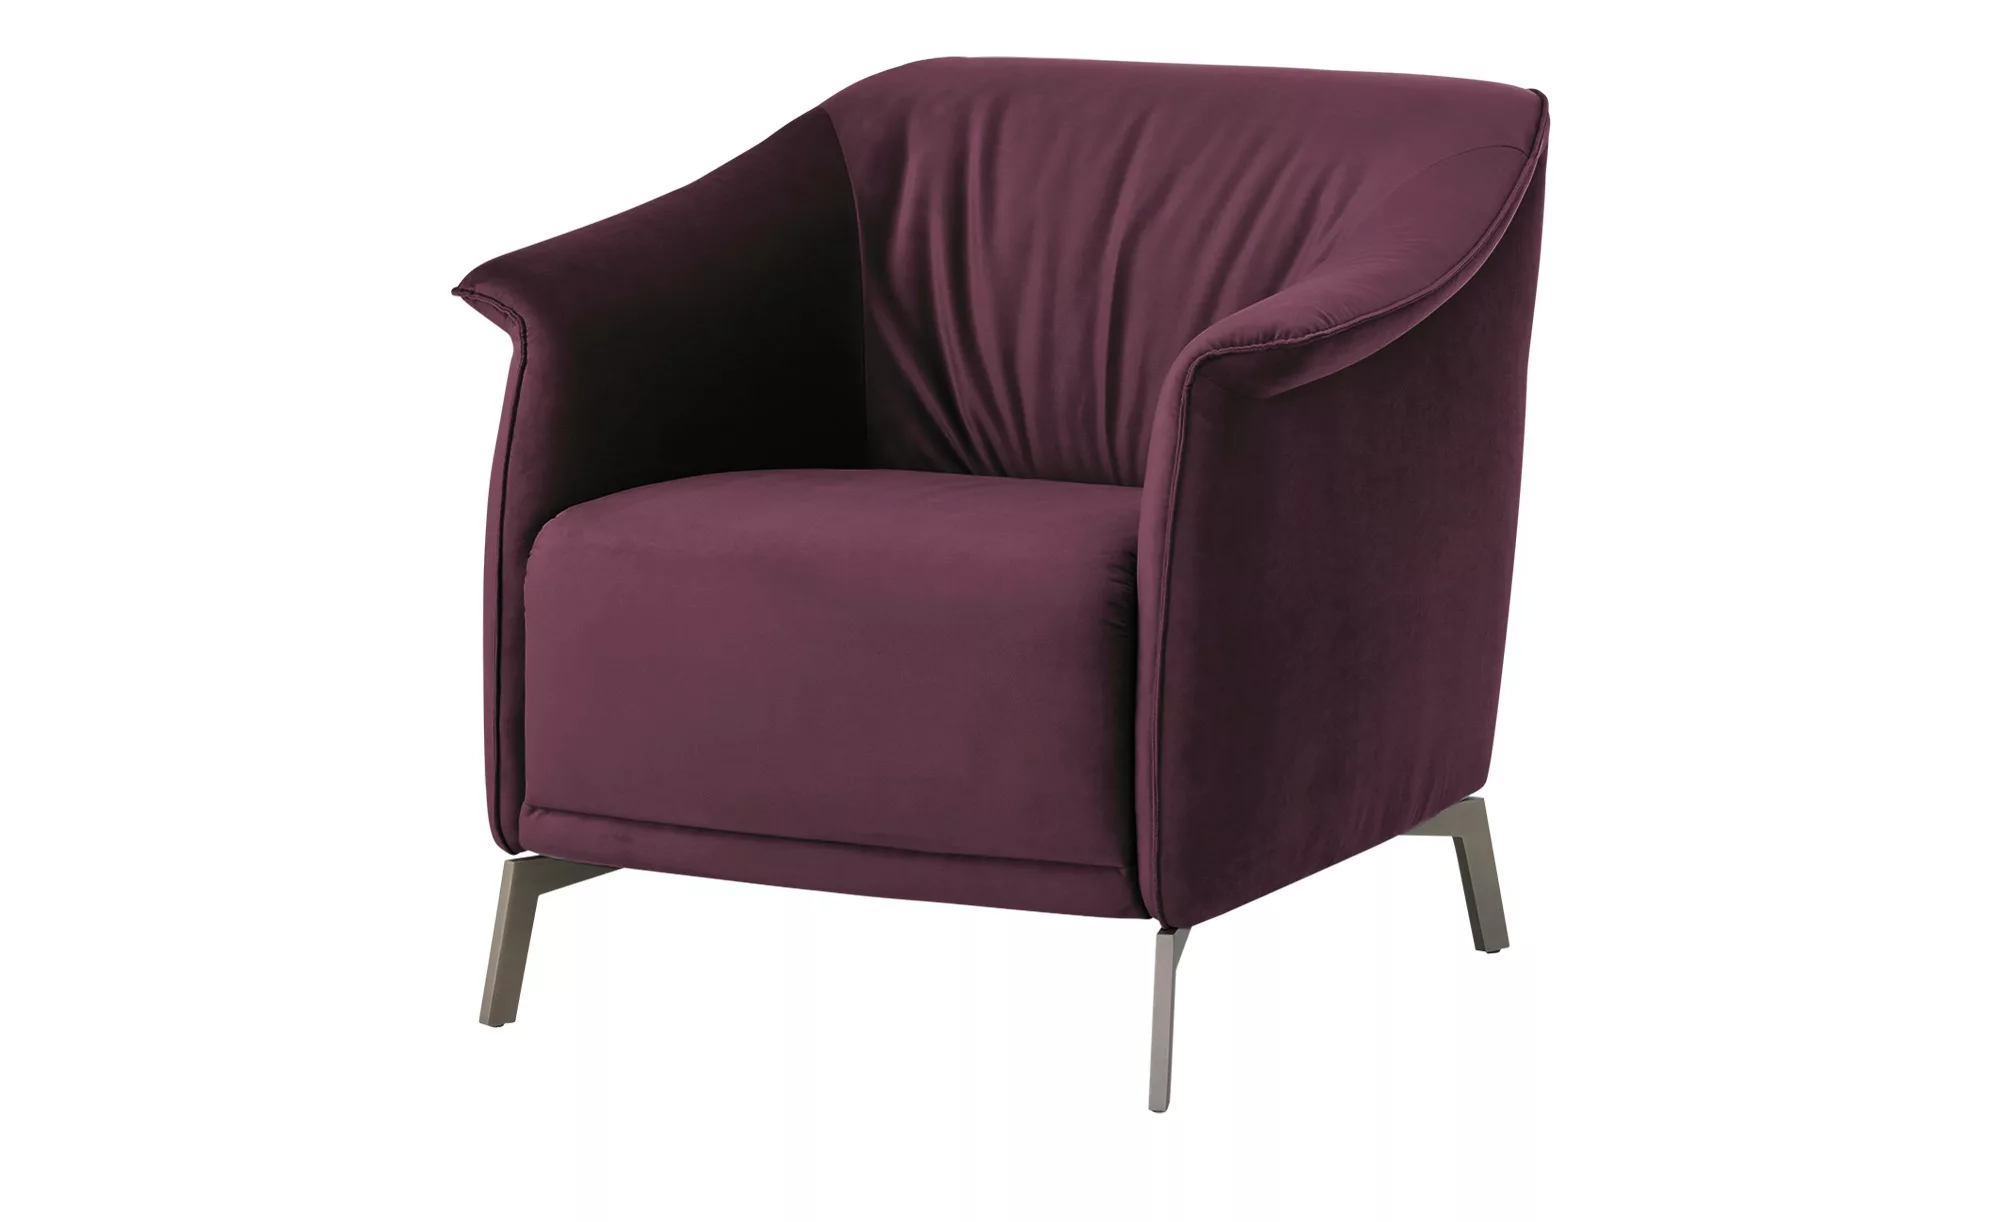 Sessel - blau - 80 cm - 77 cm - 83 cm - Polstermöbel > Sessel > Polstersess günstig online kaufen